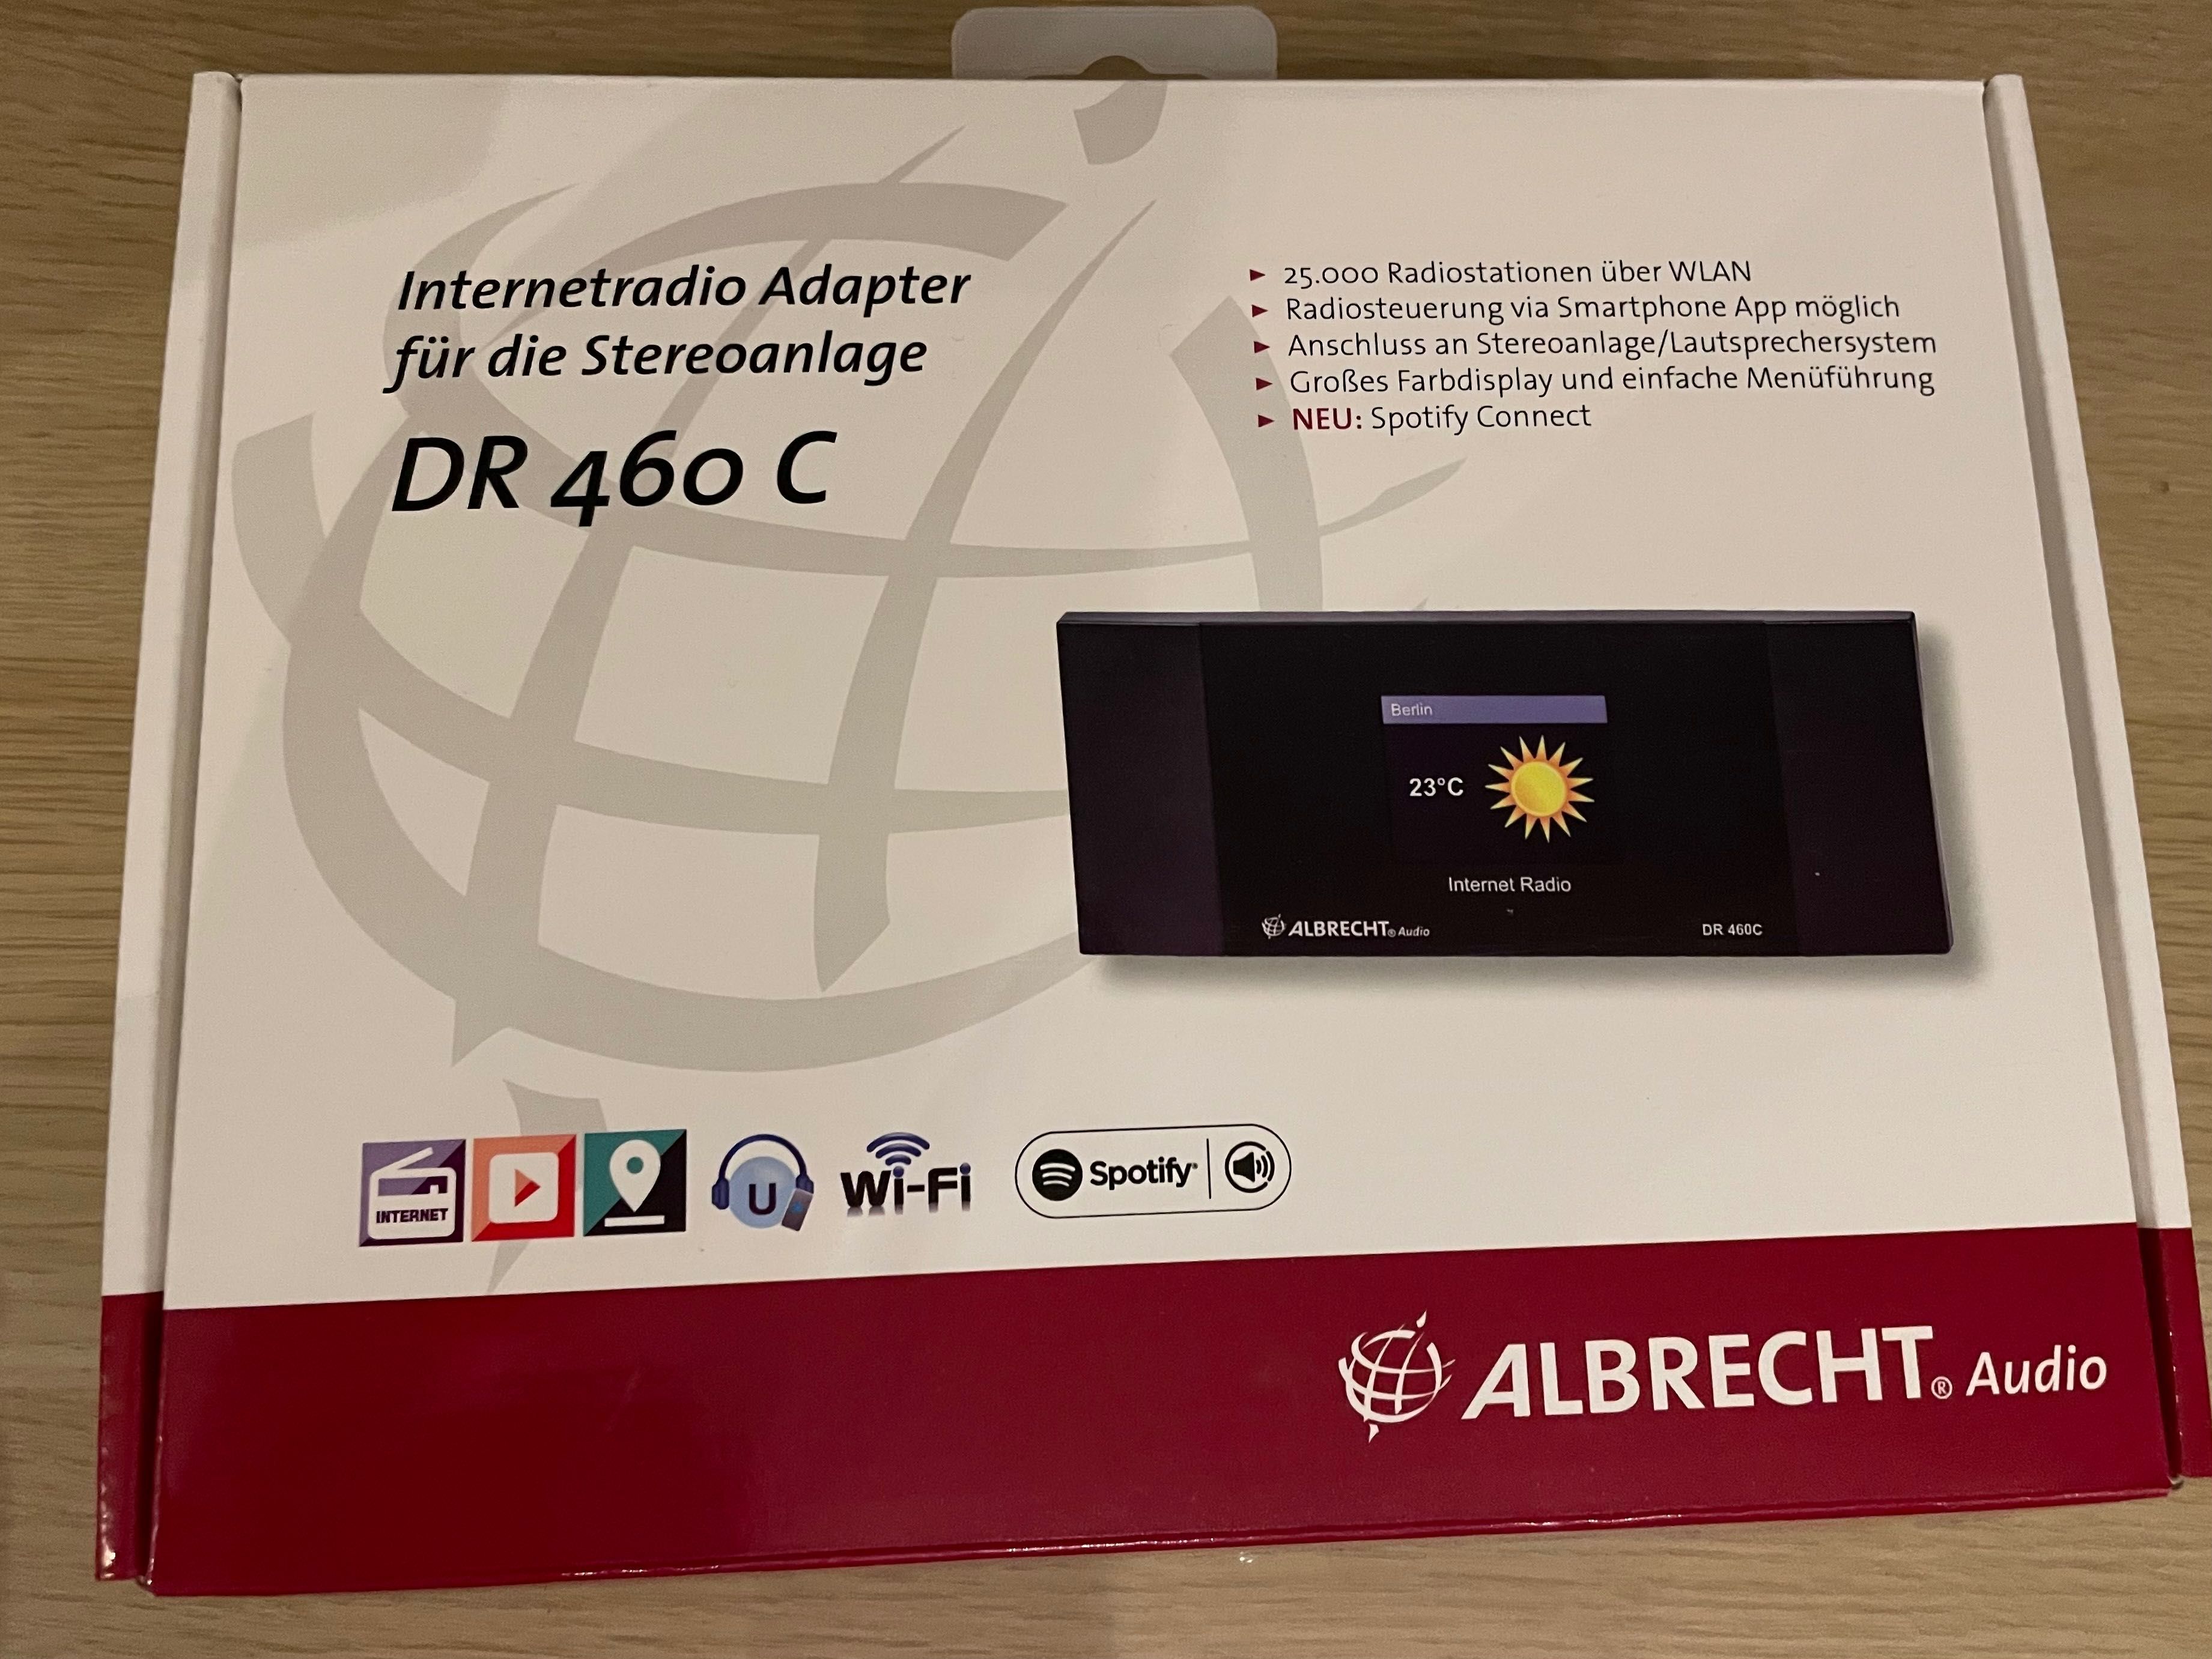 Tuner radia internetowego Albrecht DR 460-C Radio internetowe